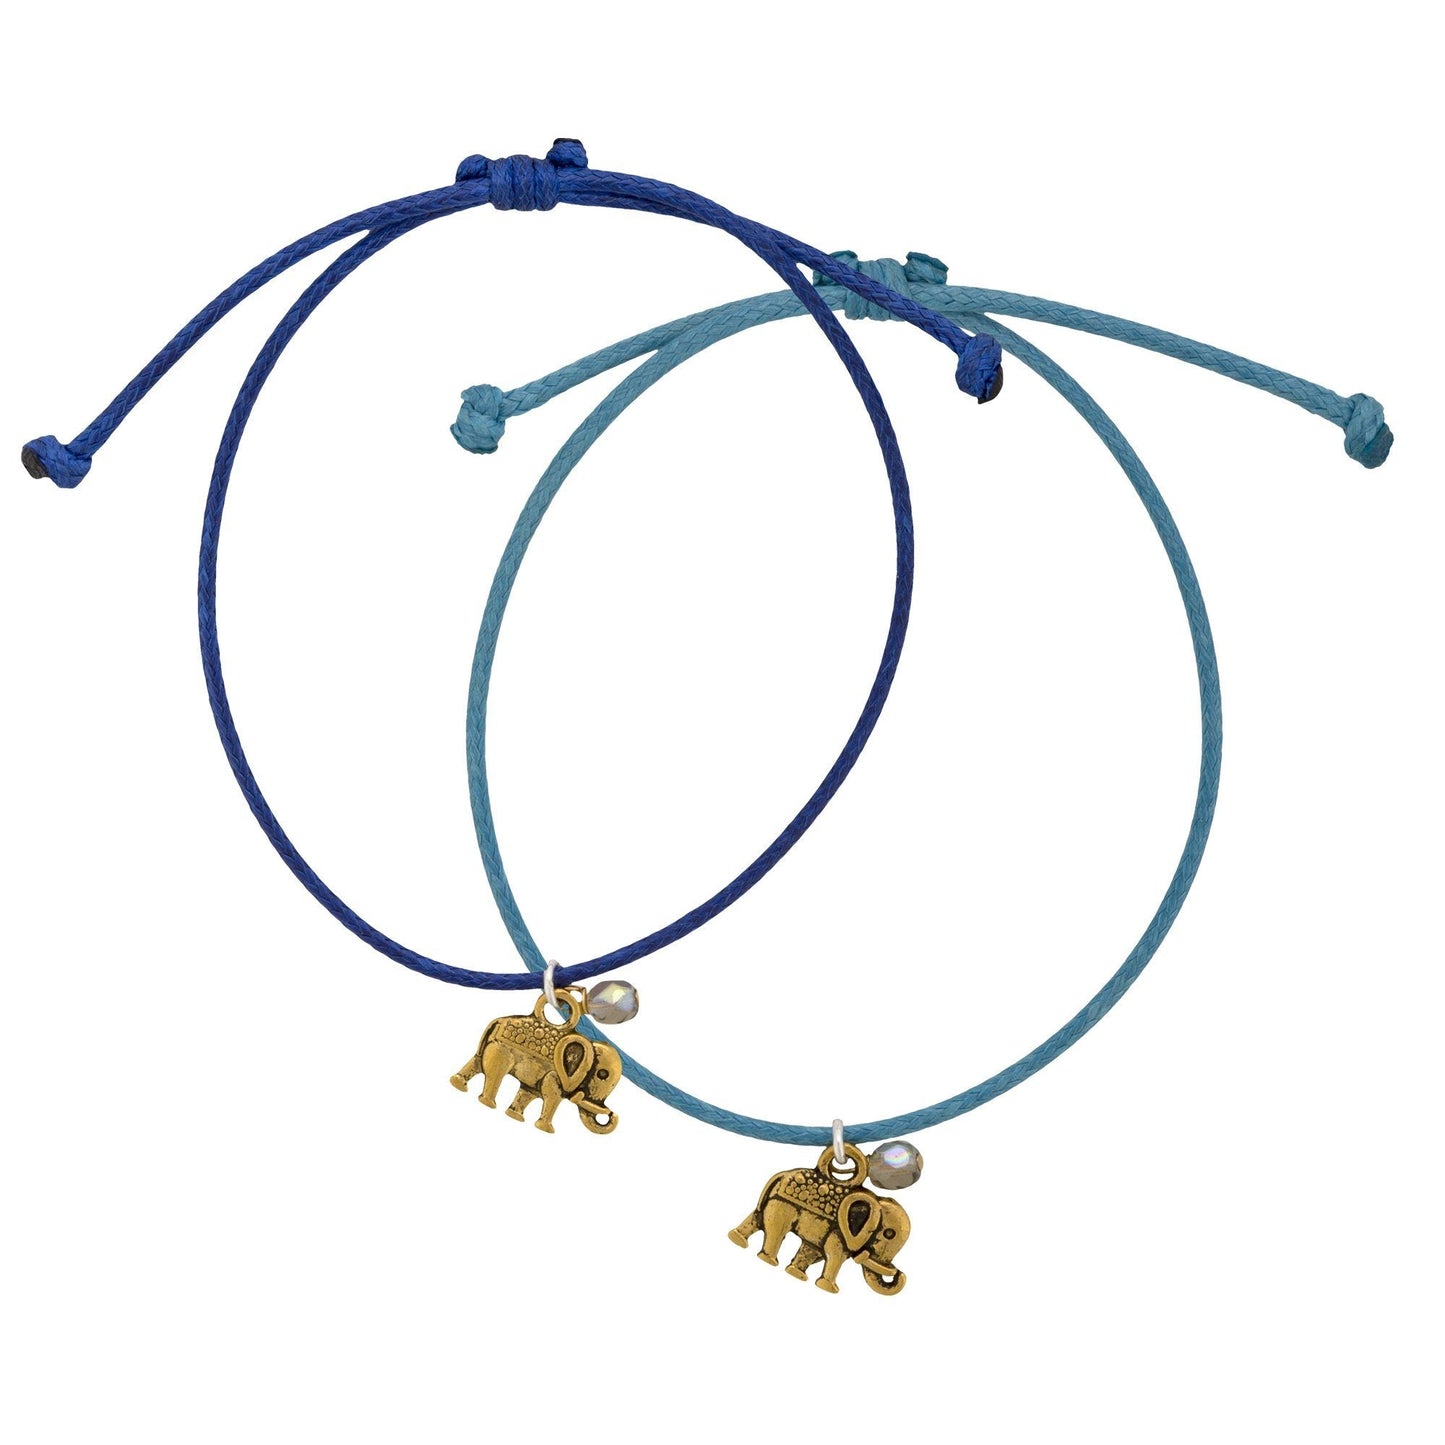 Elephant Friendship Bracelet - Set of 2!